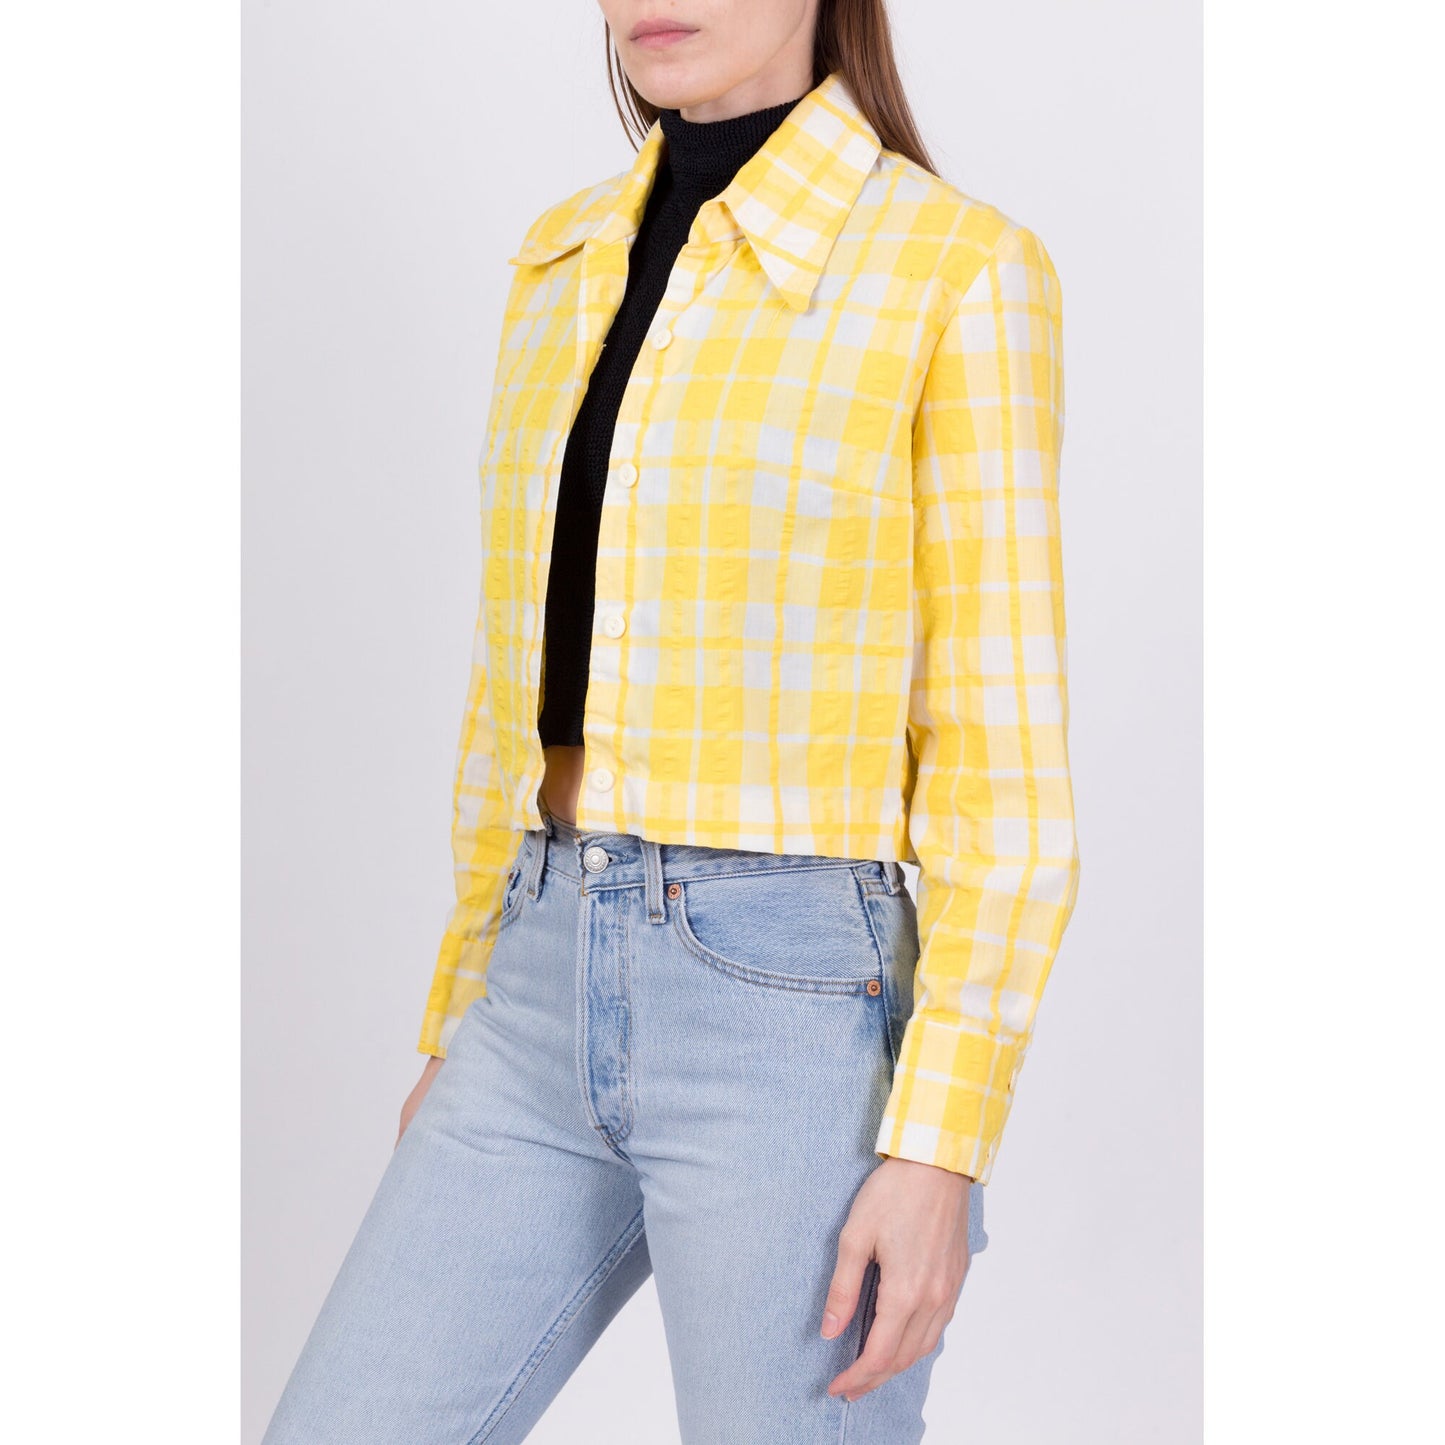 70s Yellow & White Seersucker Plaid Cropped Jacket - Medium